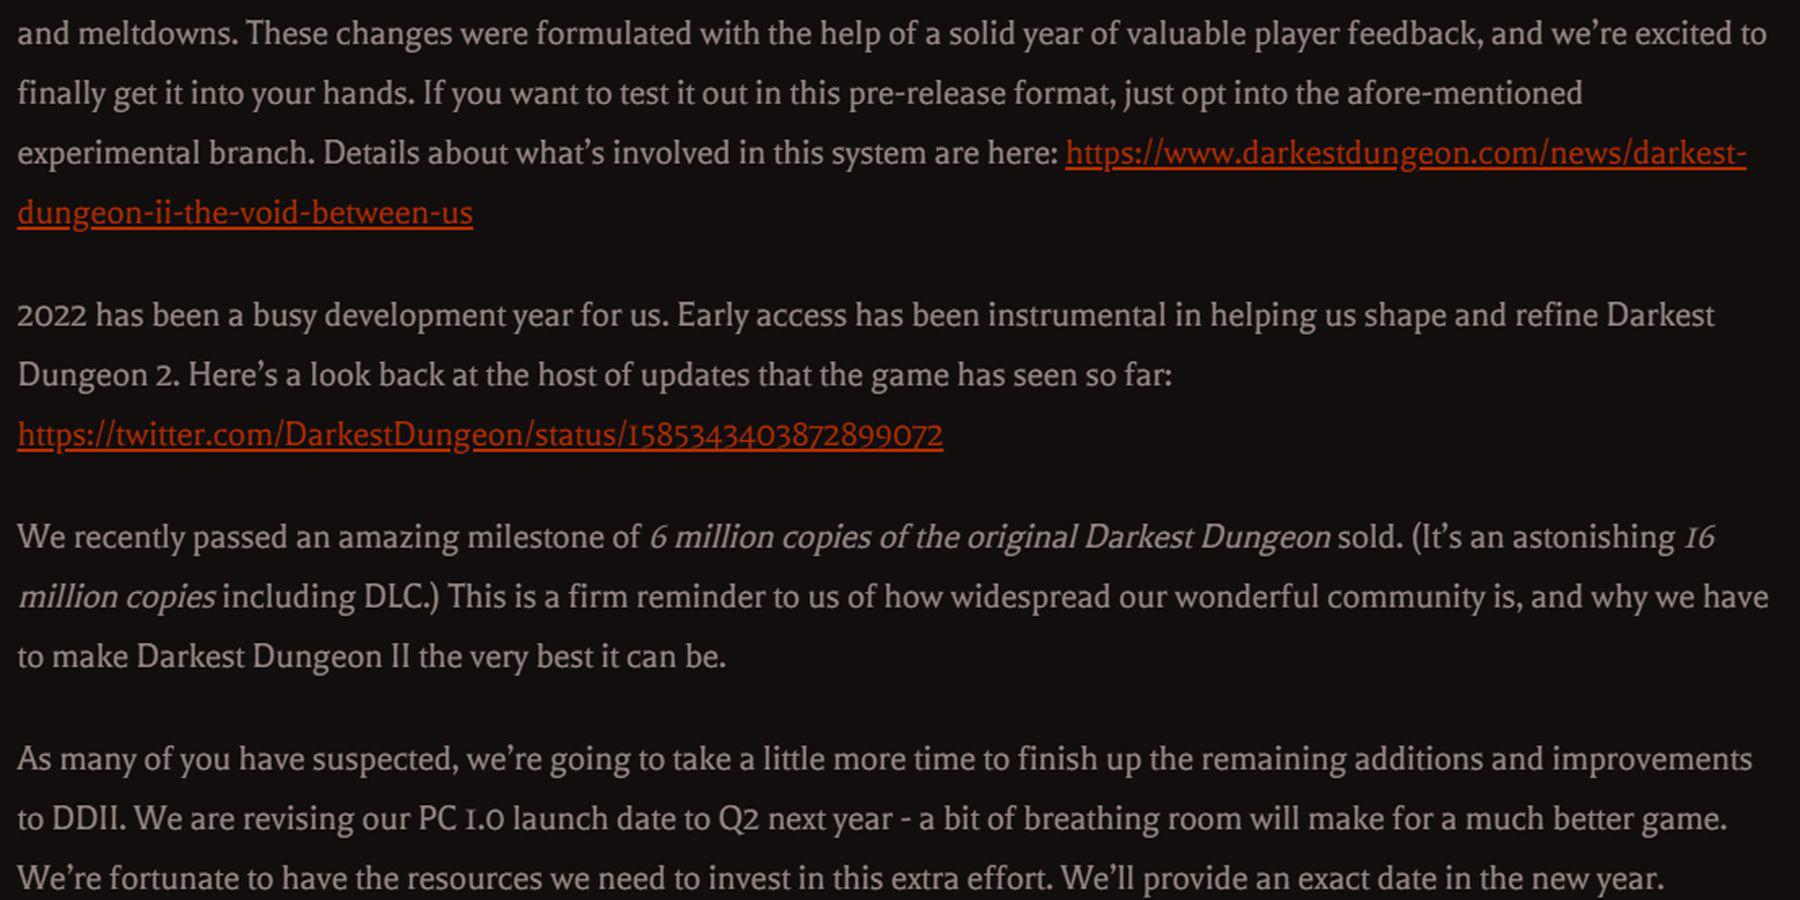 Darkest Dungeon atinge impressionante novo marco de vendas